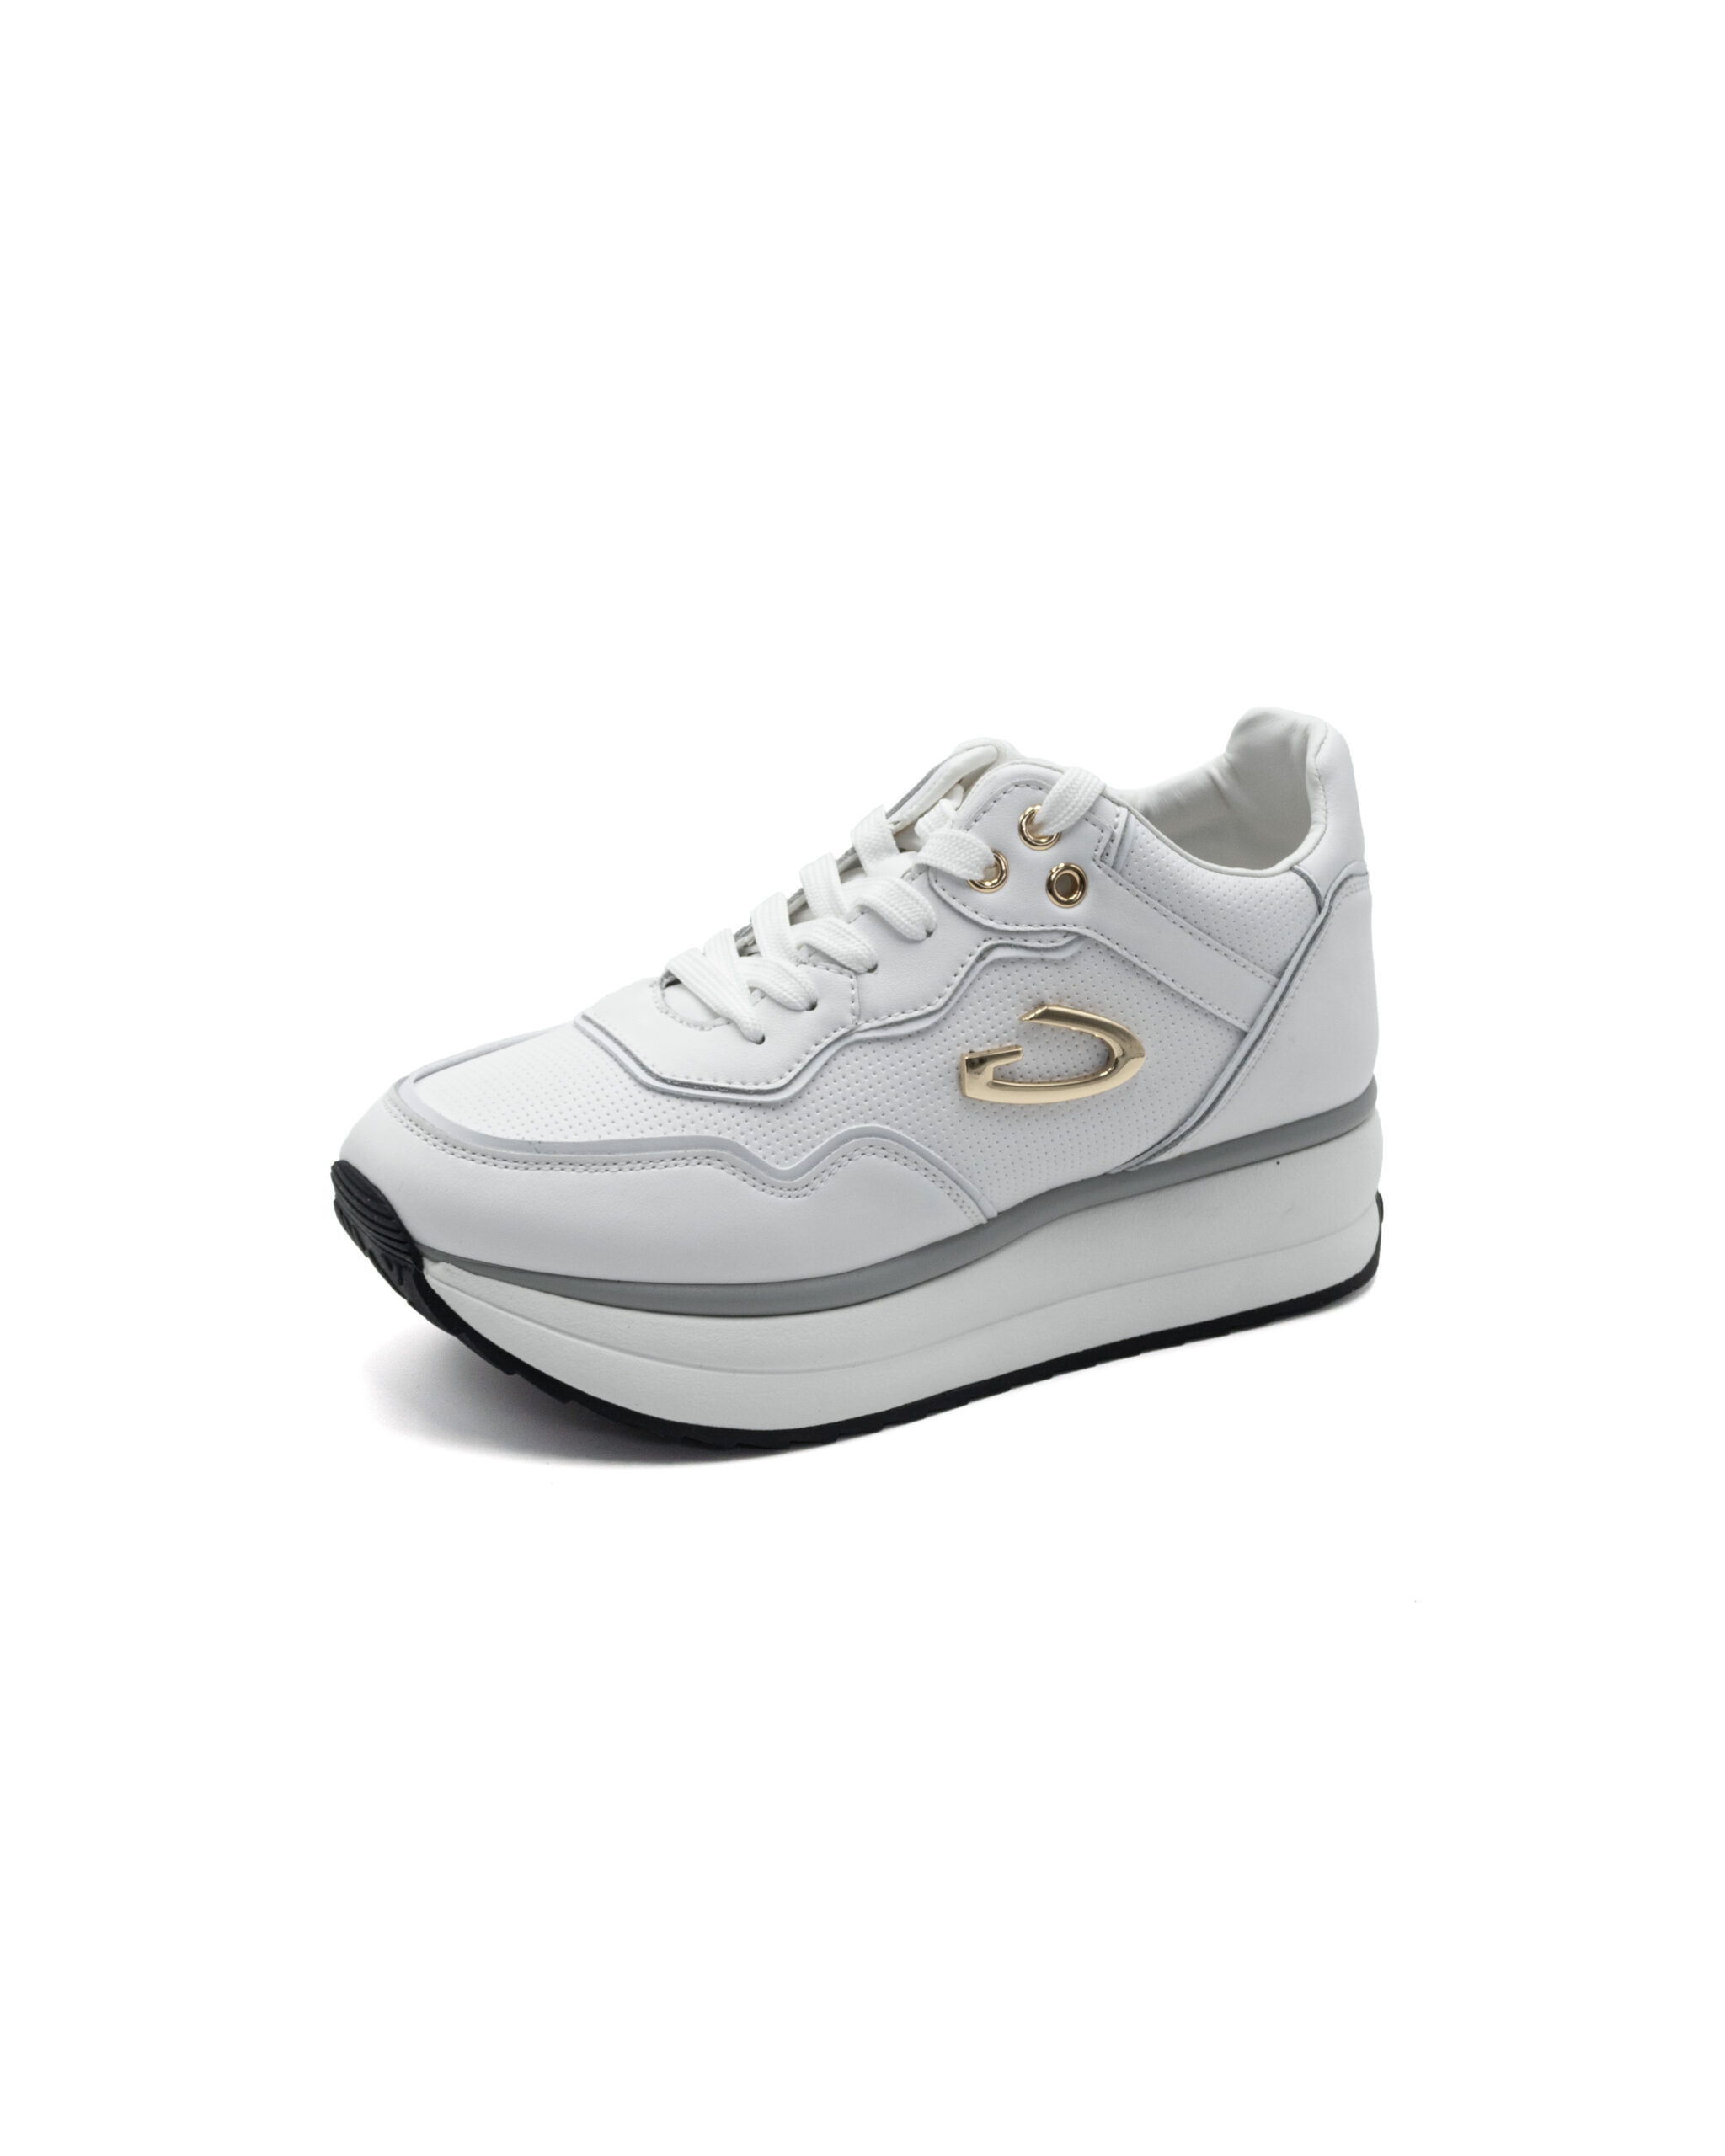 (image for) Sneakers Guardiani Louise bianche con logo metallico laminato oro